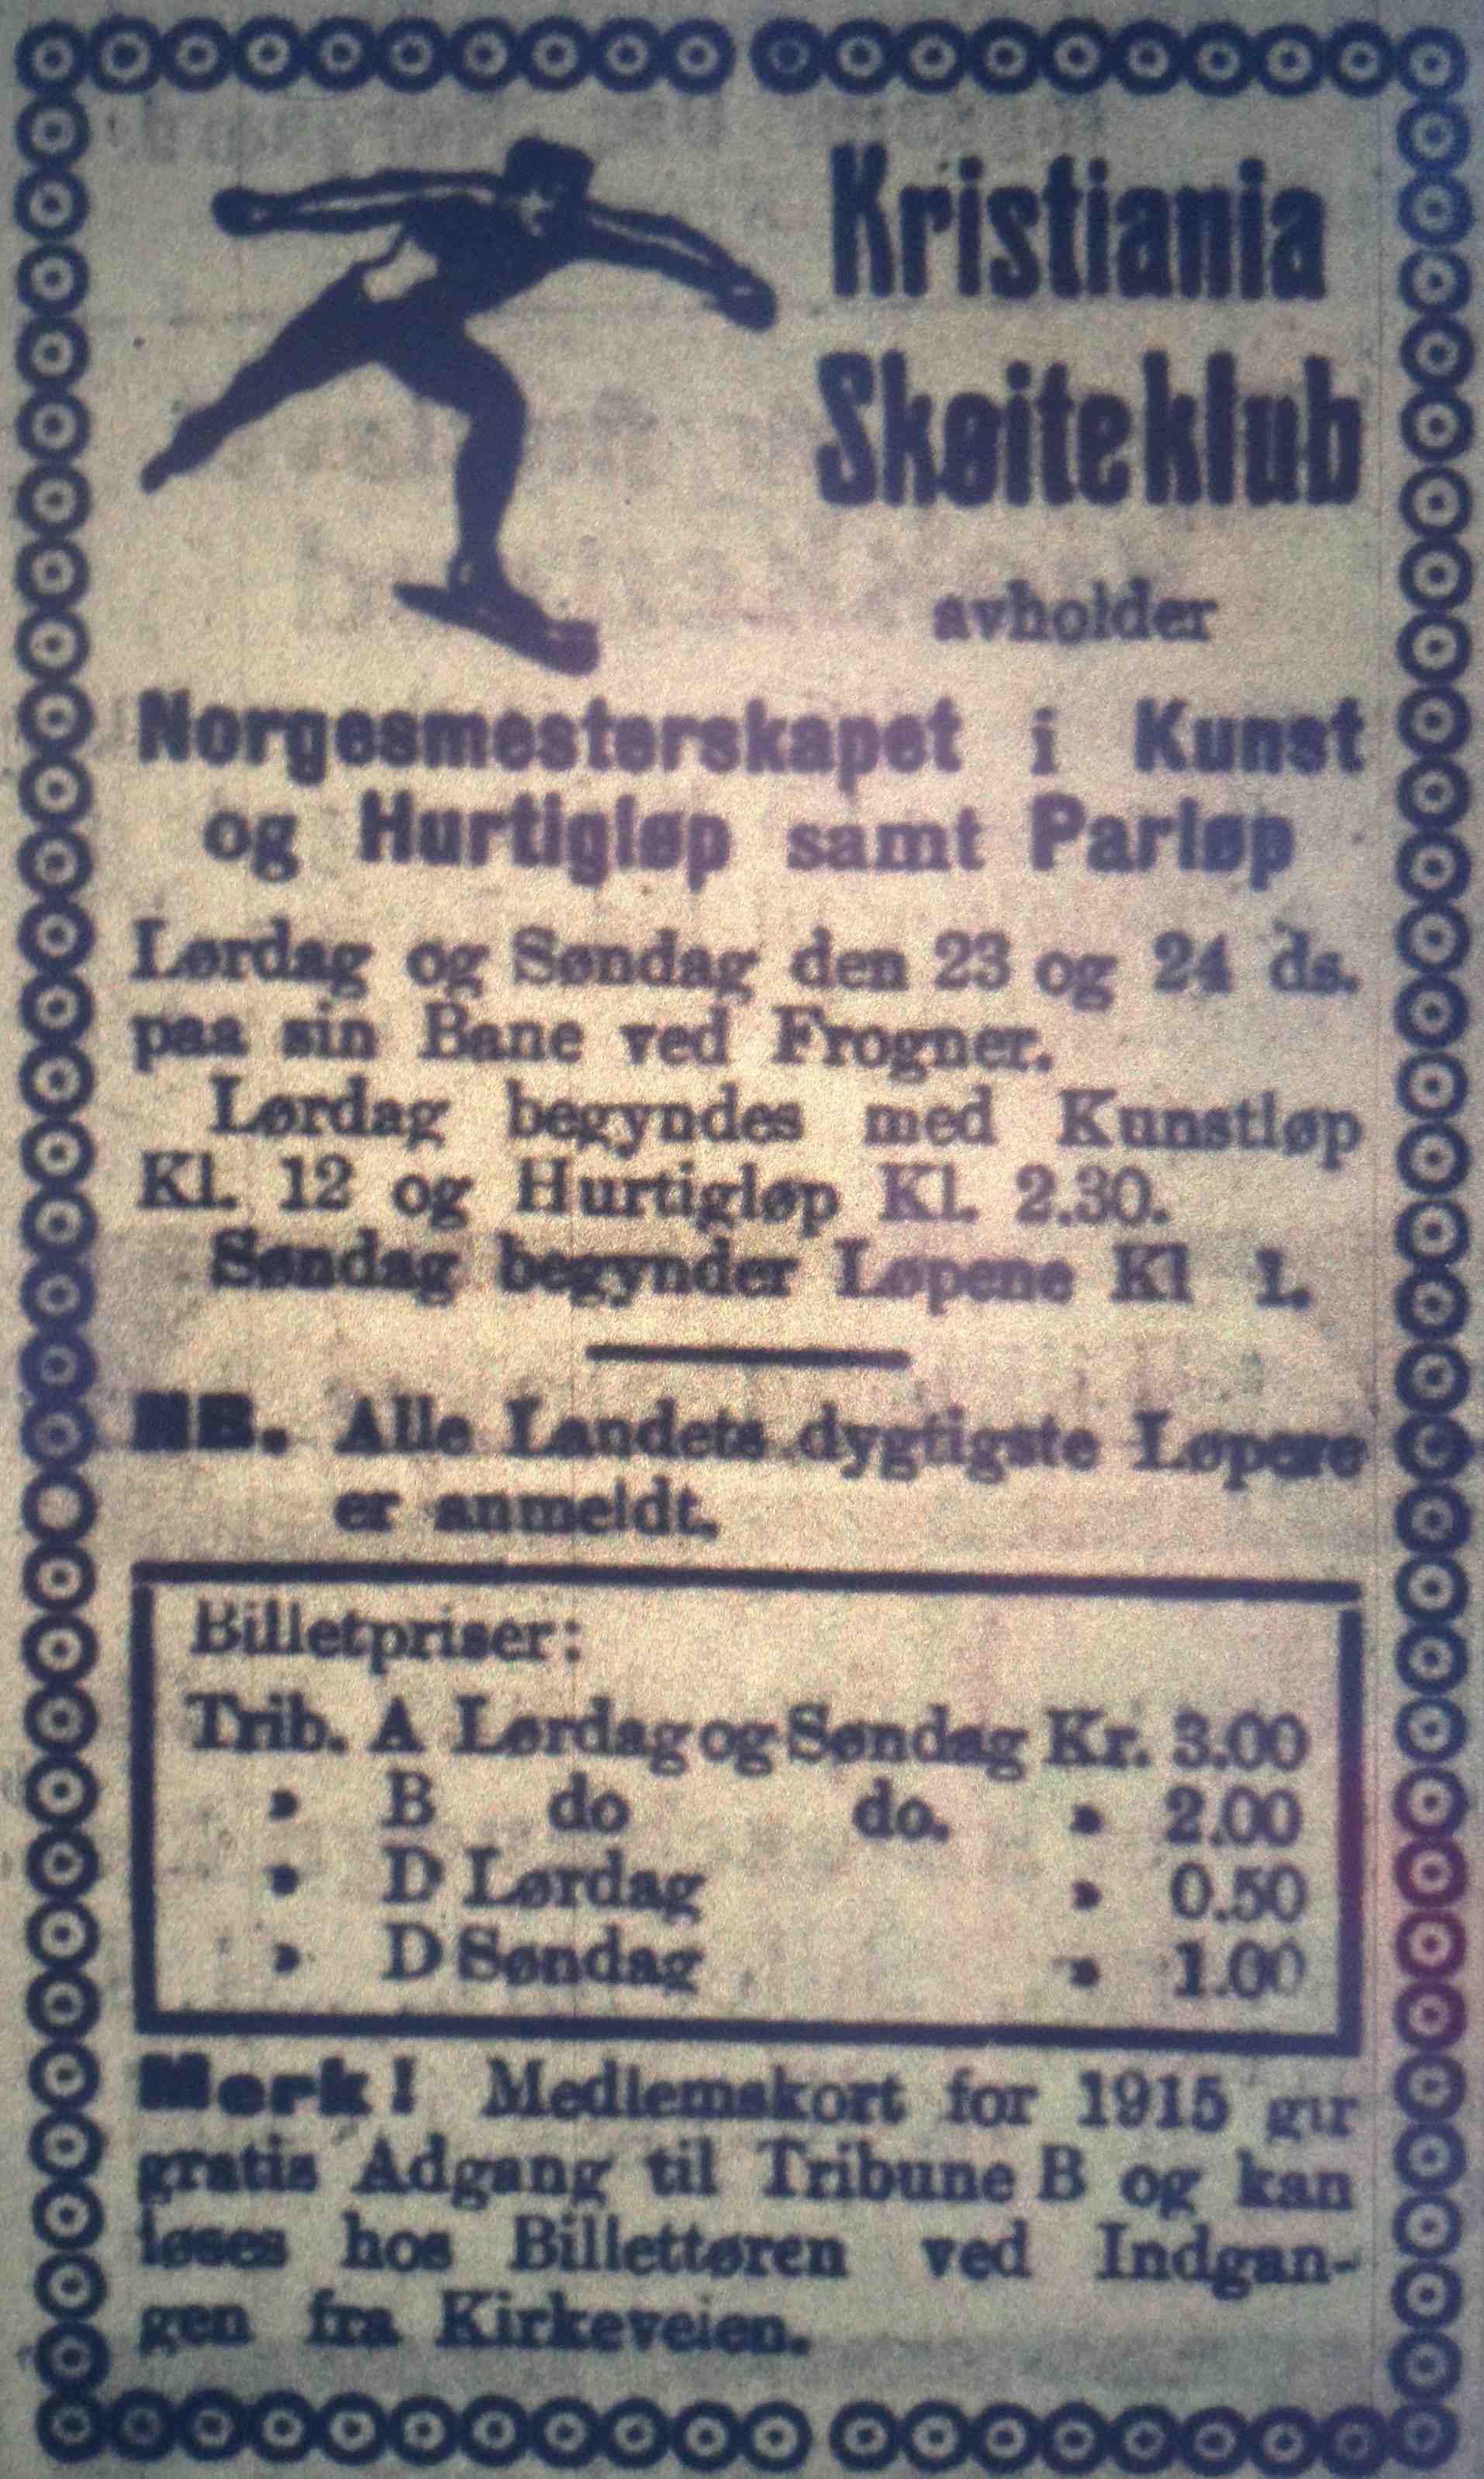 Annonse, NM 1915, fra Morgenbladet